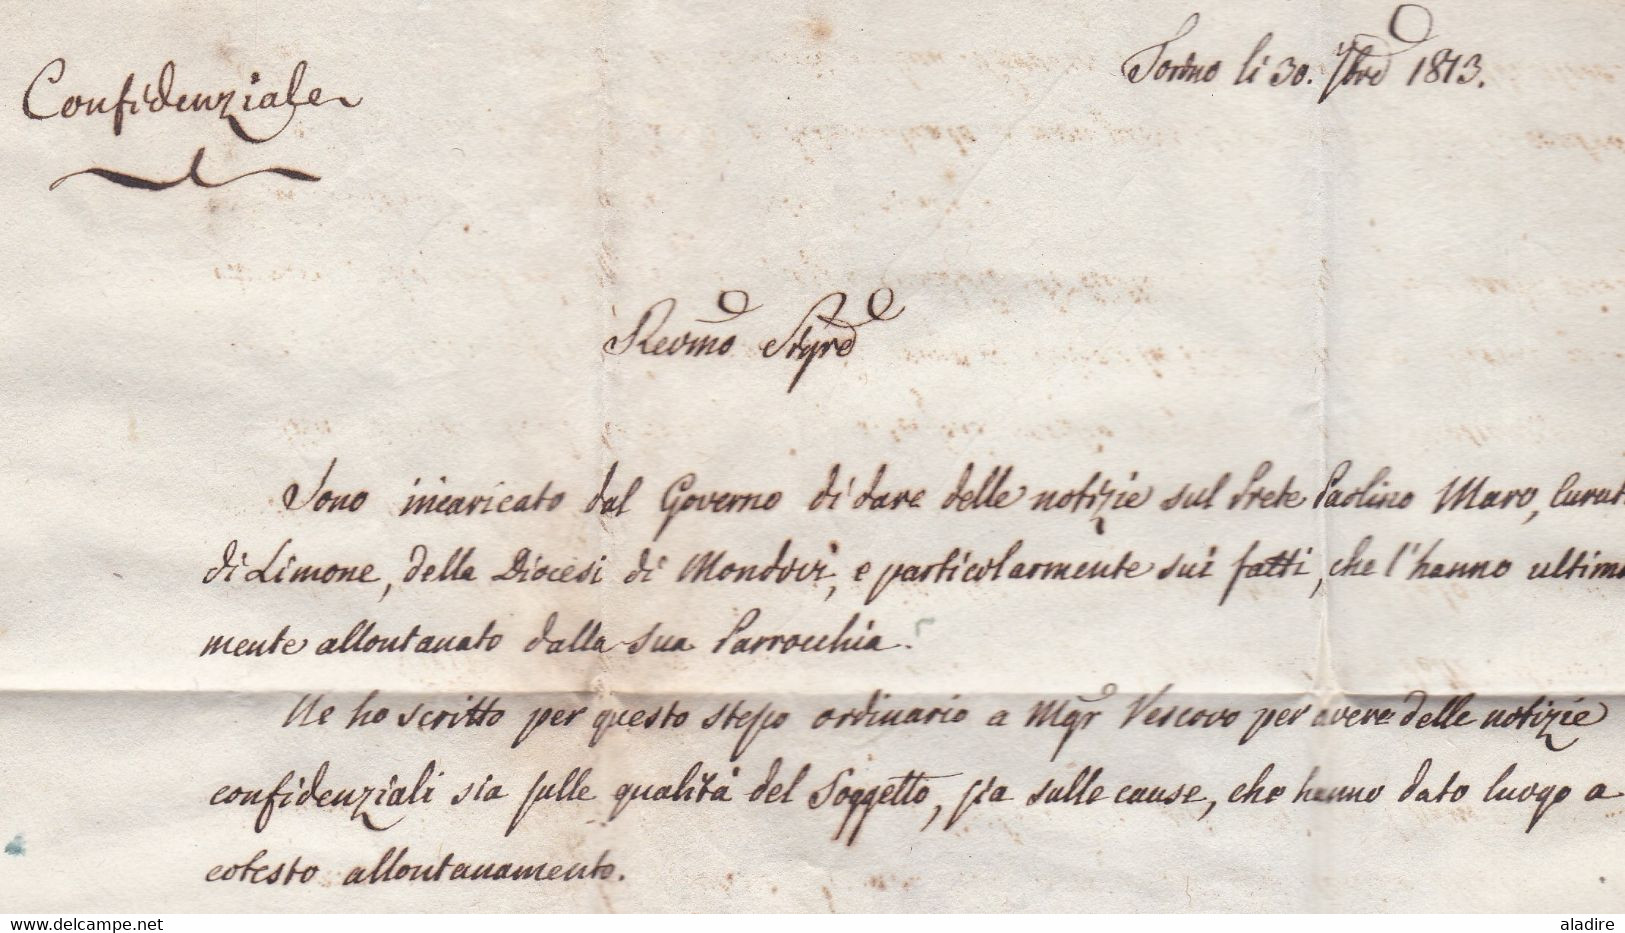 1813 - Marque postale 104 TURIN Torino sur LAC en italien vers Mondovi Aequi - taxe 4 - Biens Ecclésiastiques